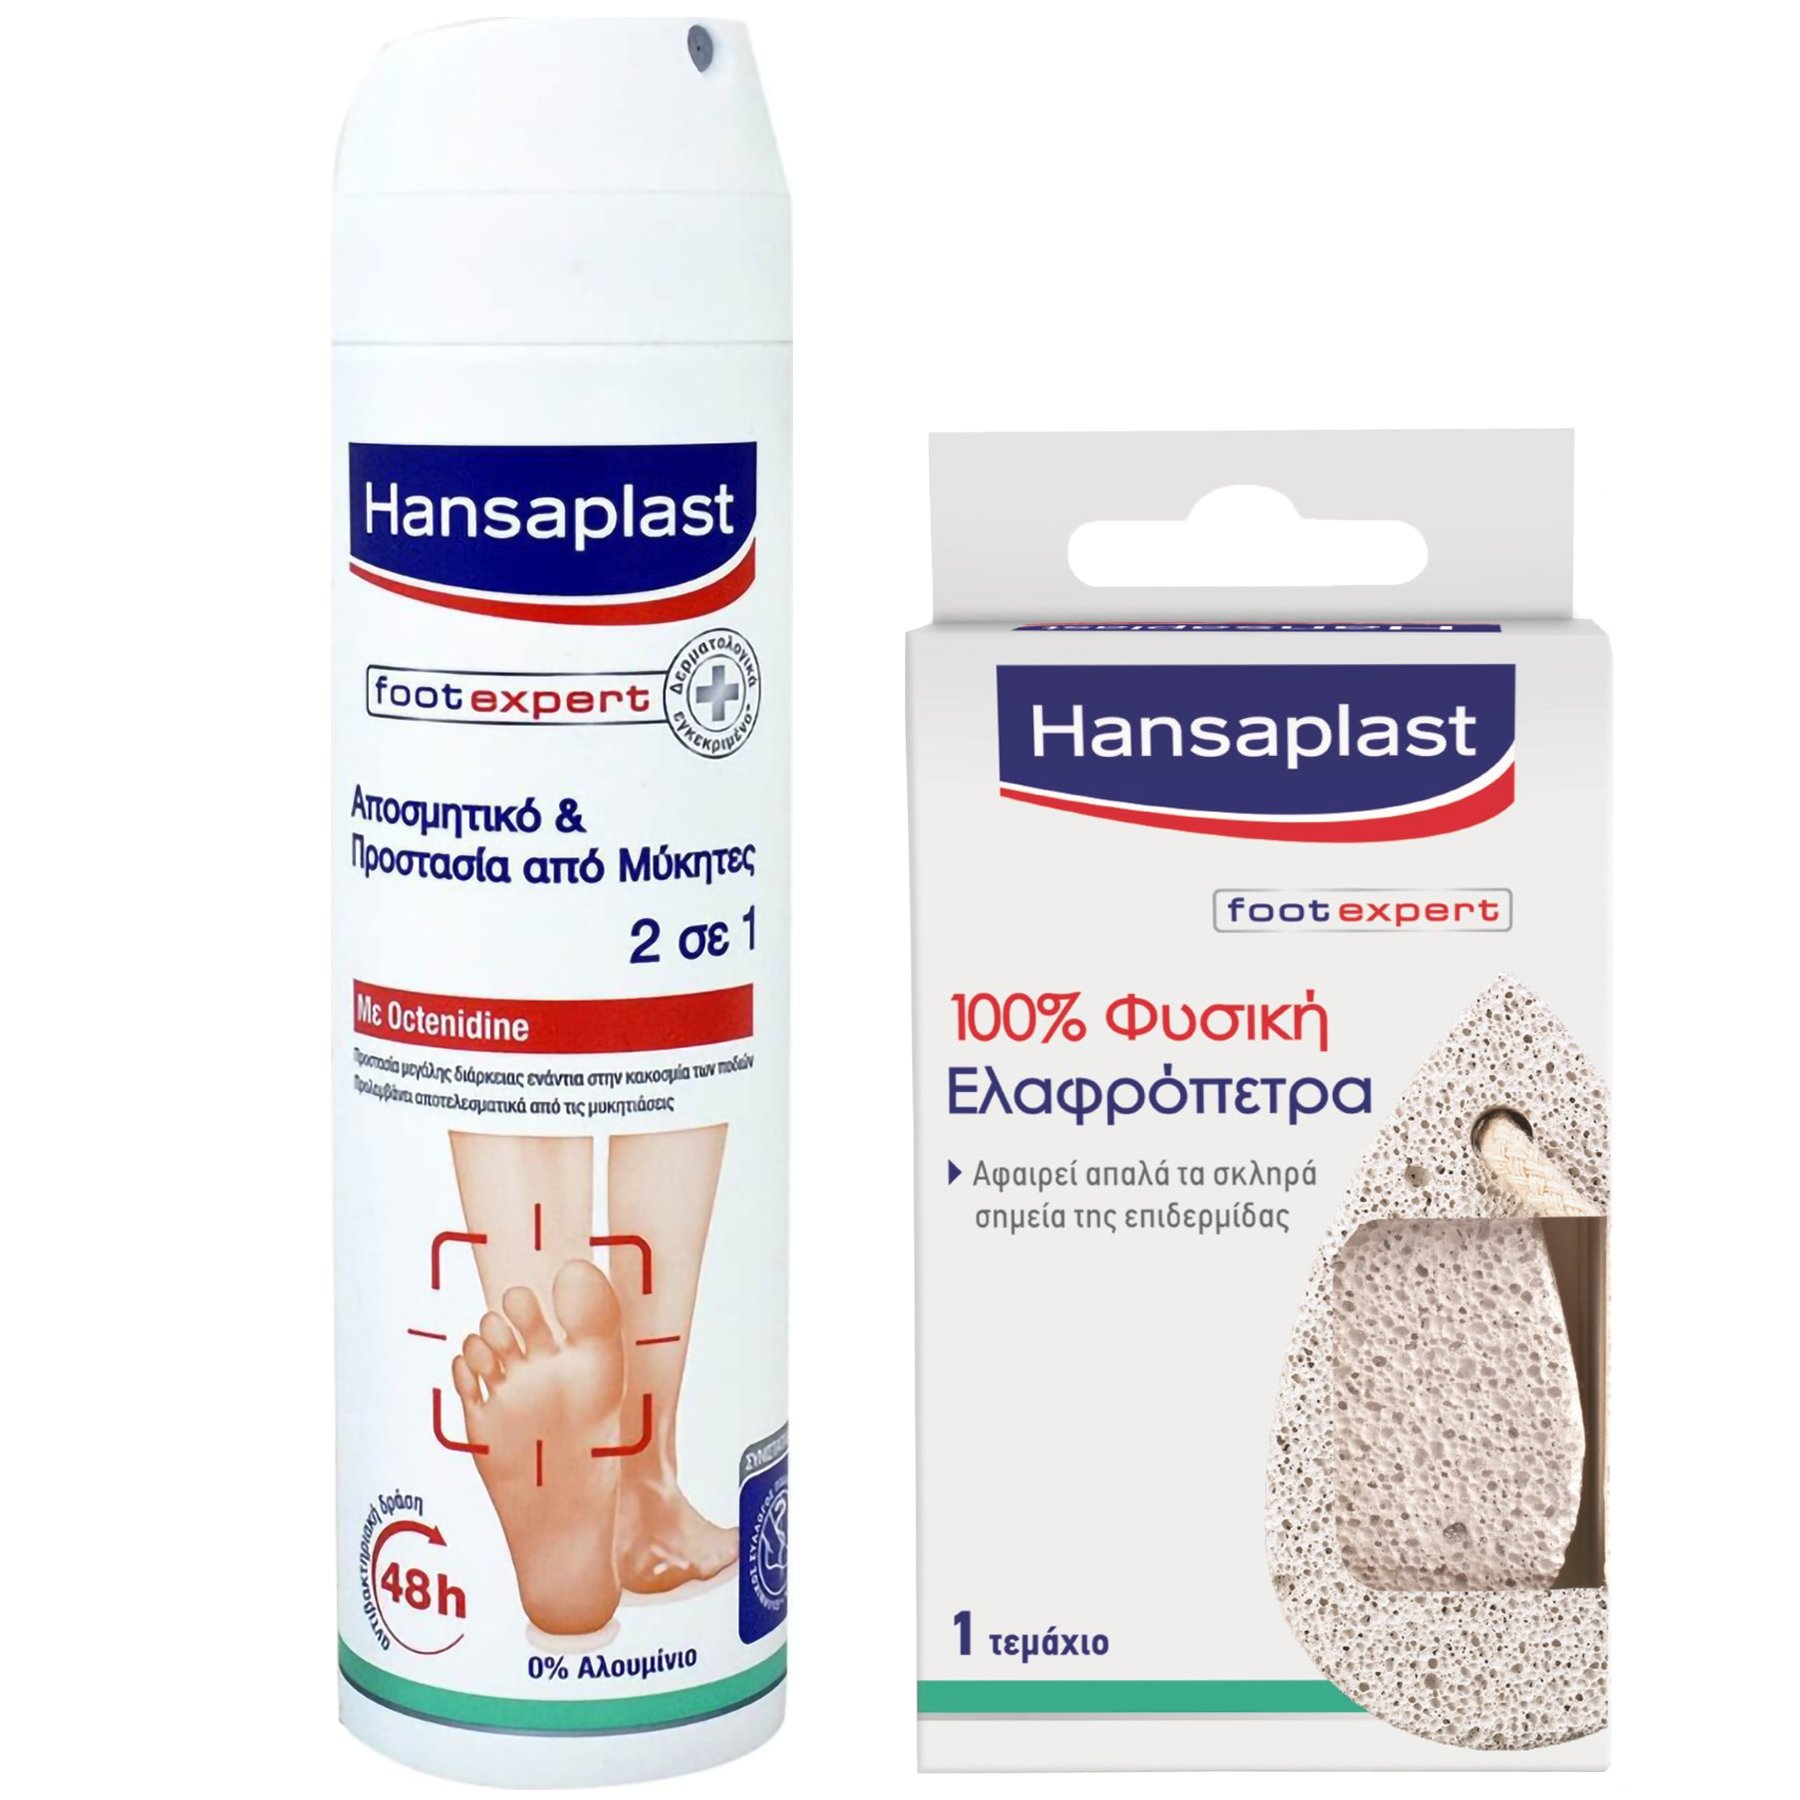 Hansaplast Hansaplast Foot Expert Πακέτο Προσφοράς Athlete's Foot Protection 2 in 1 Deo 150ml & Δώρο Φυσική Ελαφρόπετρα 1 Τεμάχιο